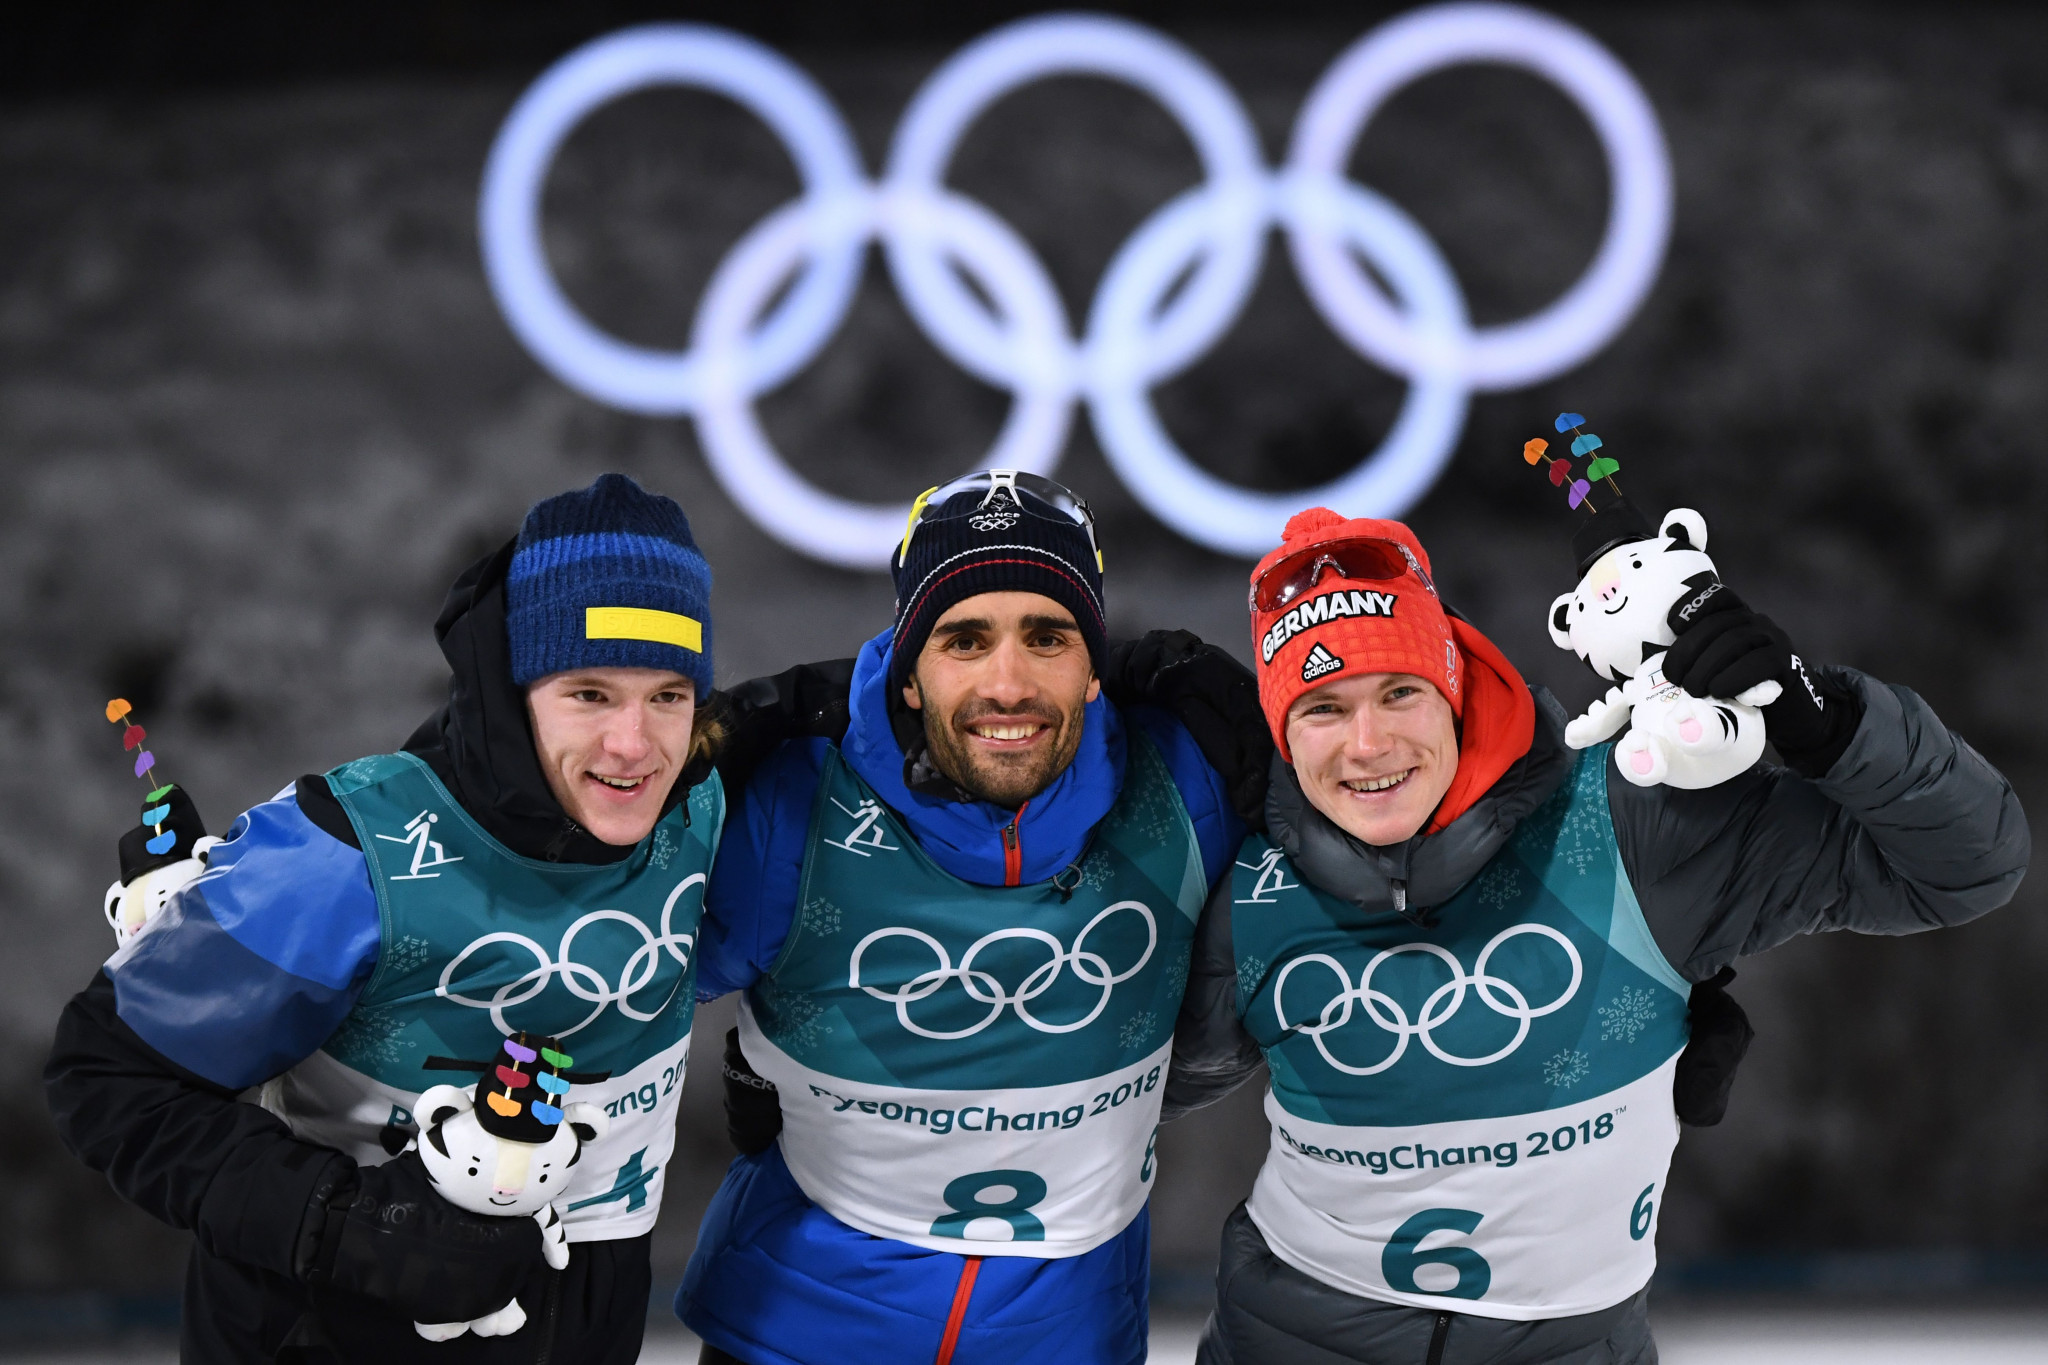 Martin Fourcade, centre, alongside fellow medal winners in the biathlon ©Getty Images